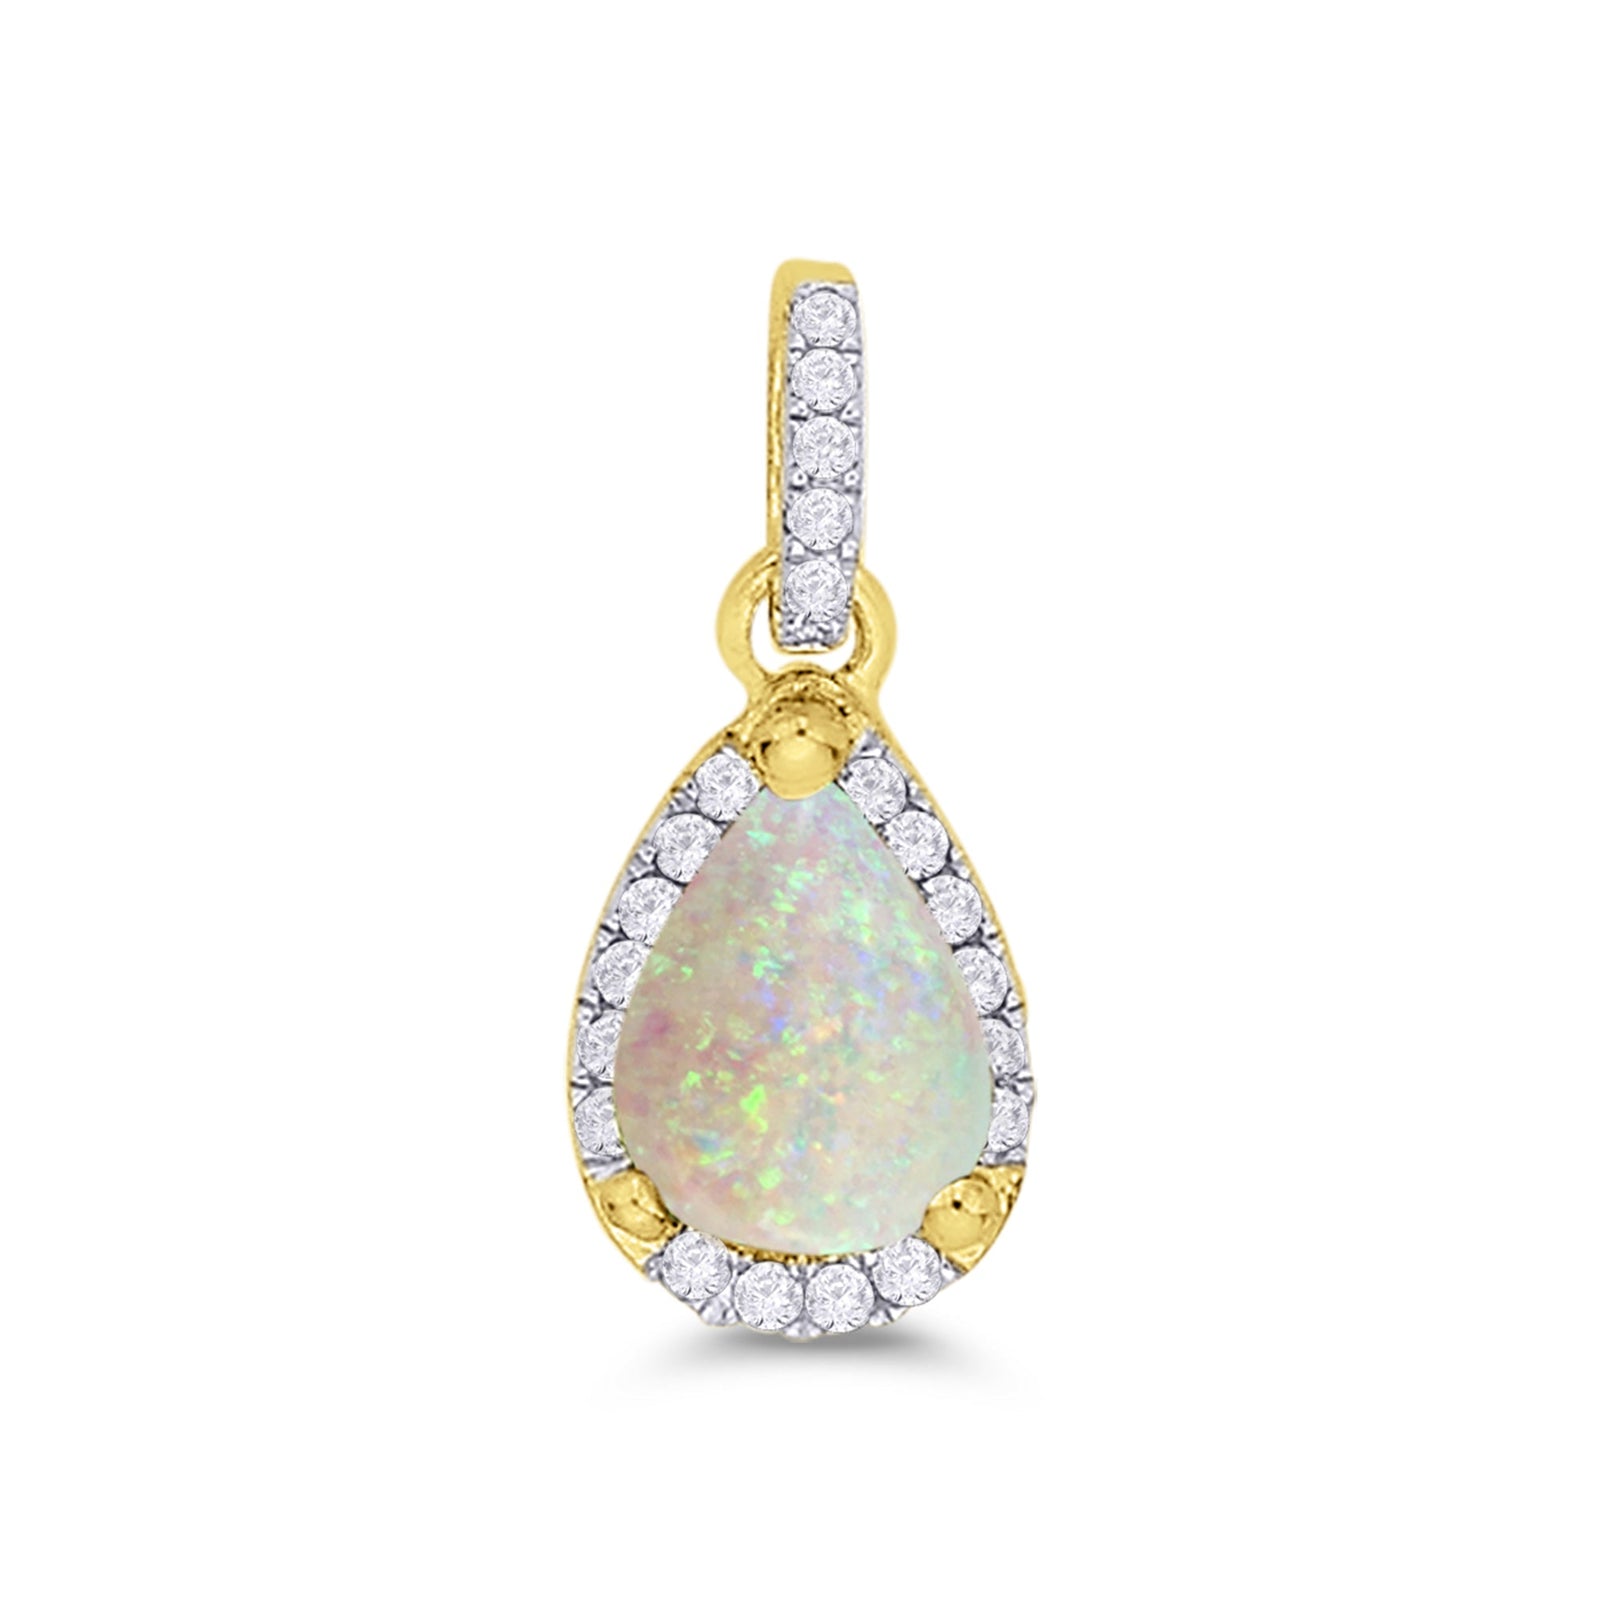 9ct gold 7x5mm pear shape opal & diamond cluster pendant with diamond set bale 0.13ct